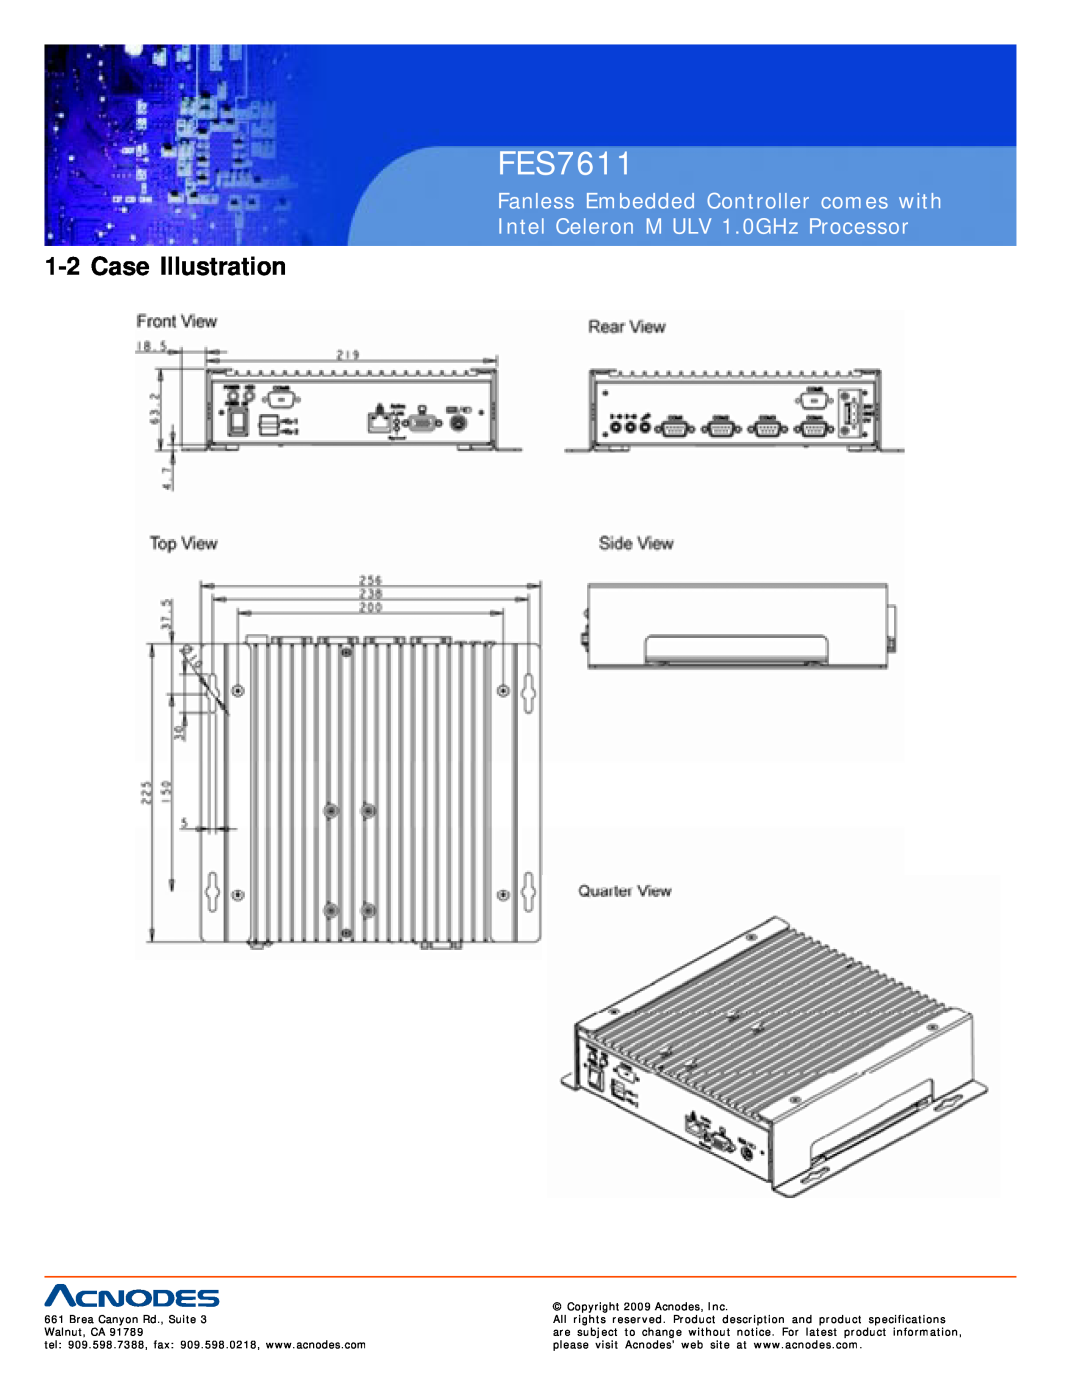 Acnodes FES7611 user manual Case Illustration, Fanless Embedded Controller comes with, Intel Celeron M ULV 1.0GHz Processor 